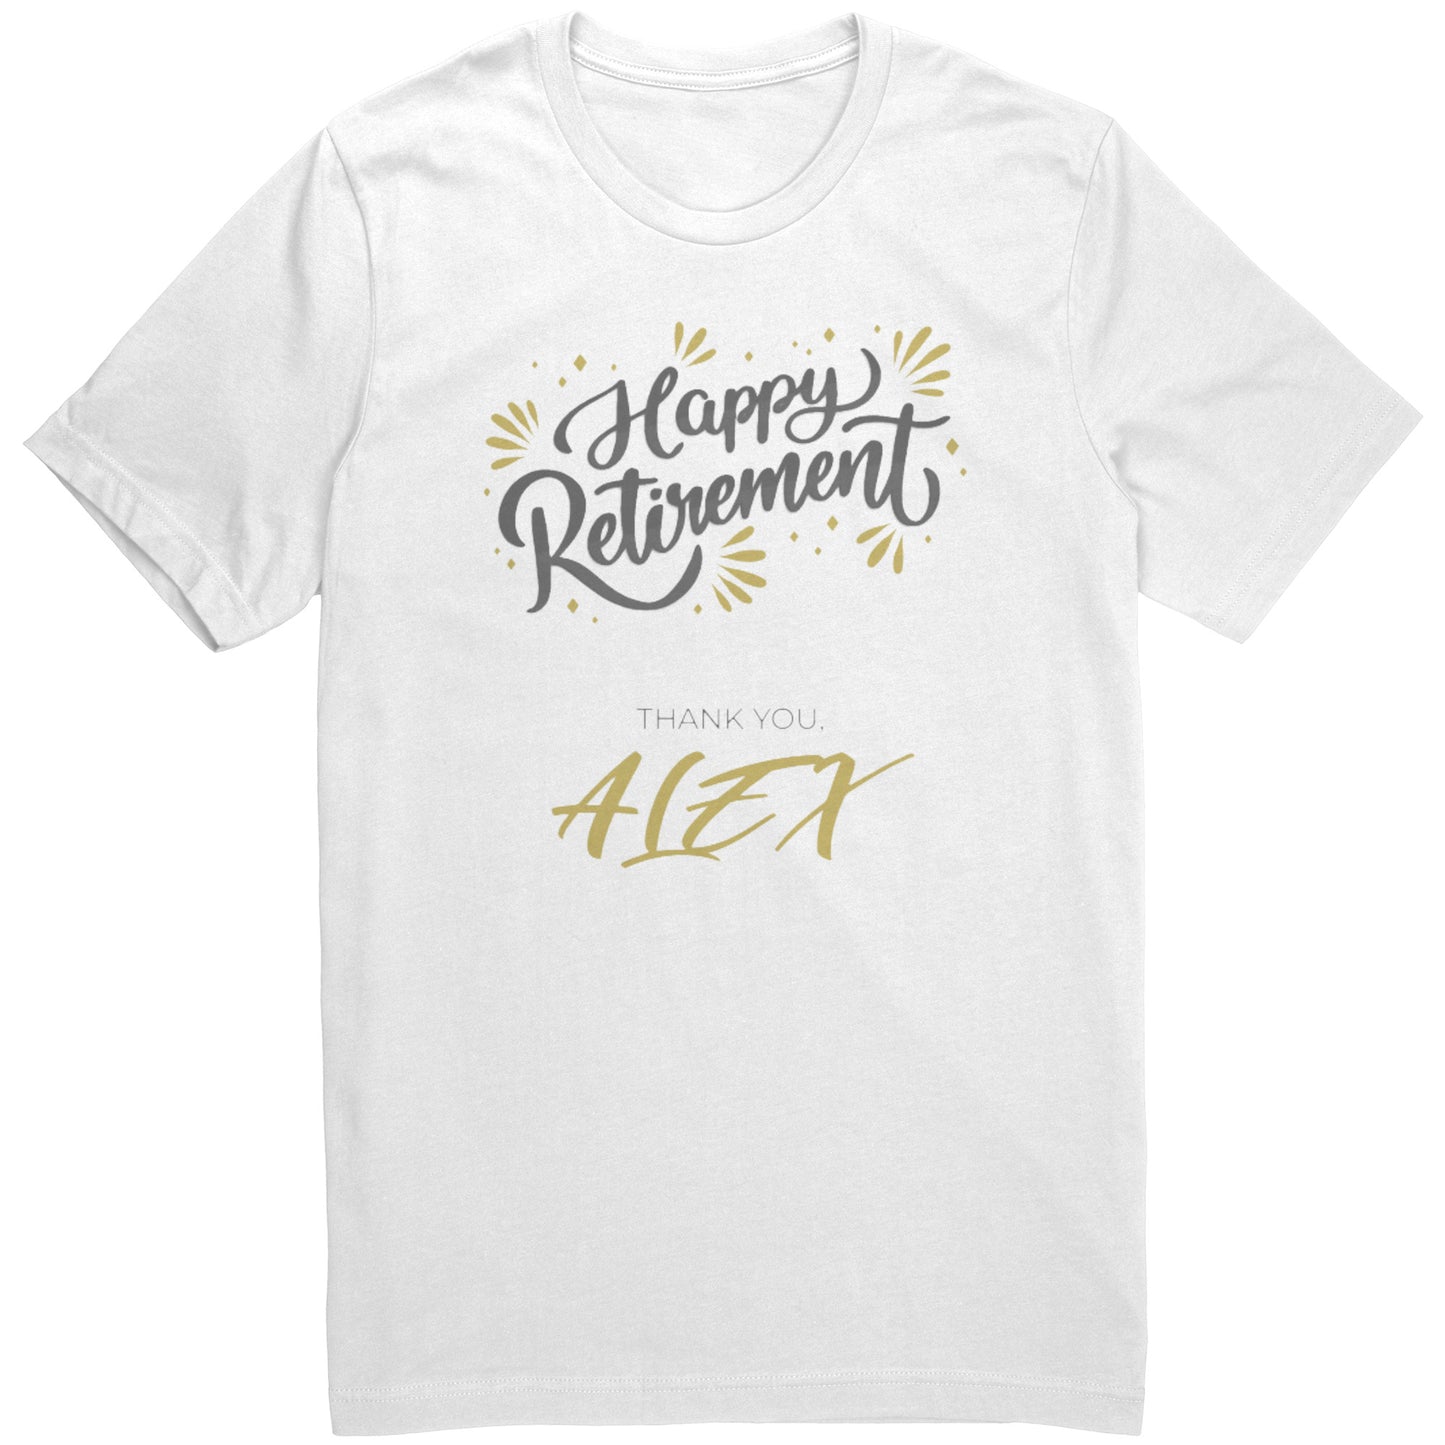 T-shirt Retirement Design 4